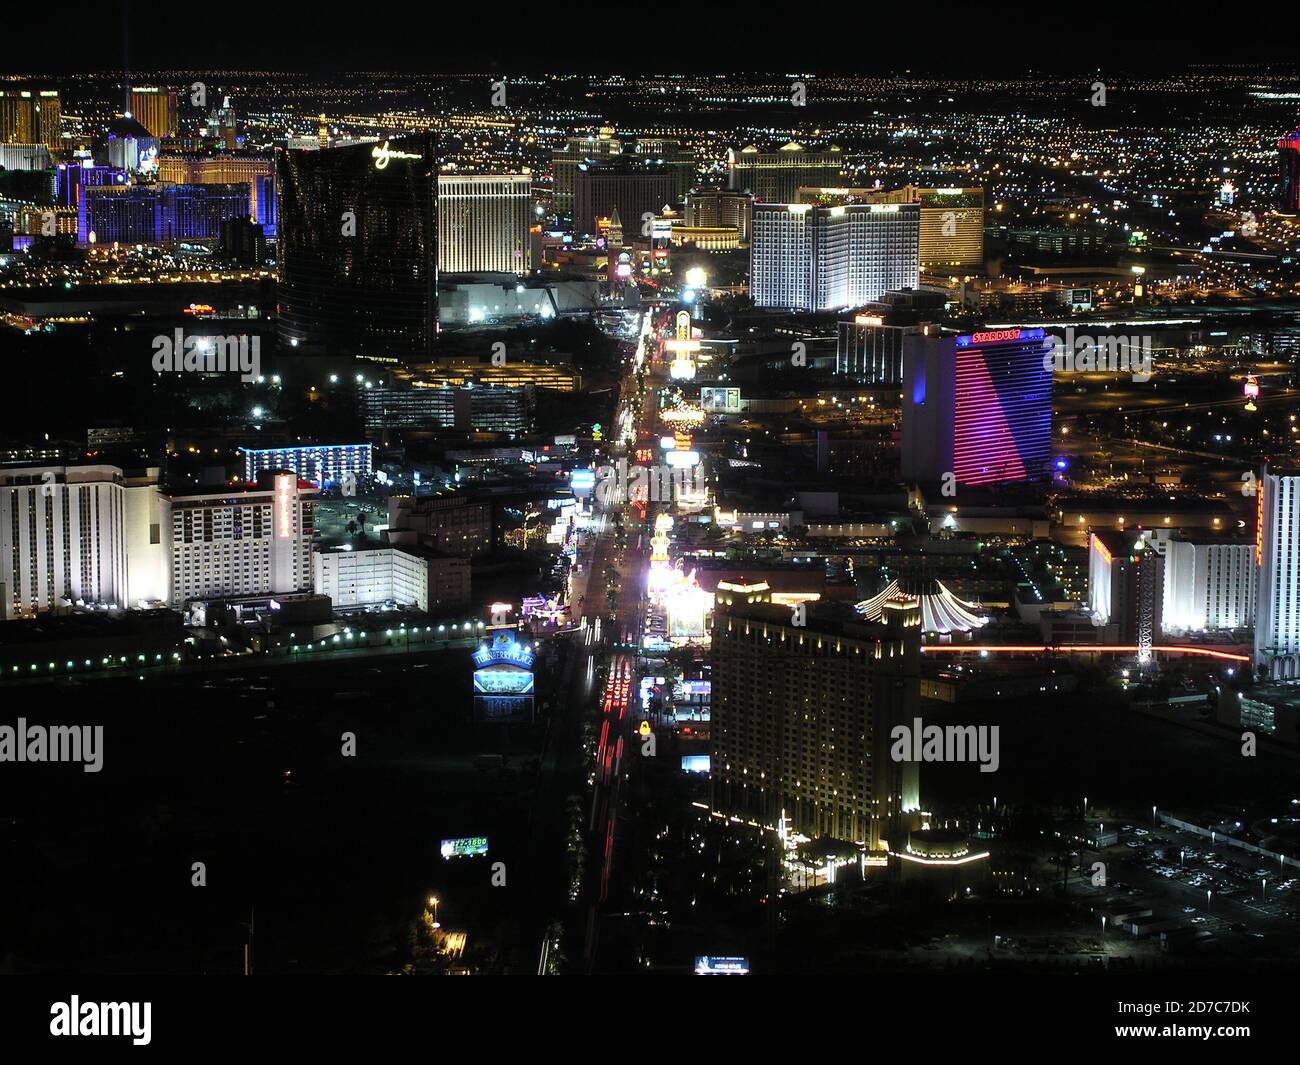 LAS VEGAS, NEVADA - NOVEMBER 22, 2004: Archival night view of Las Vegas strip hotel casino resorts. Stock Photo